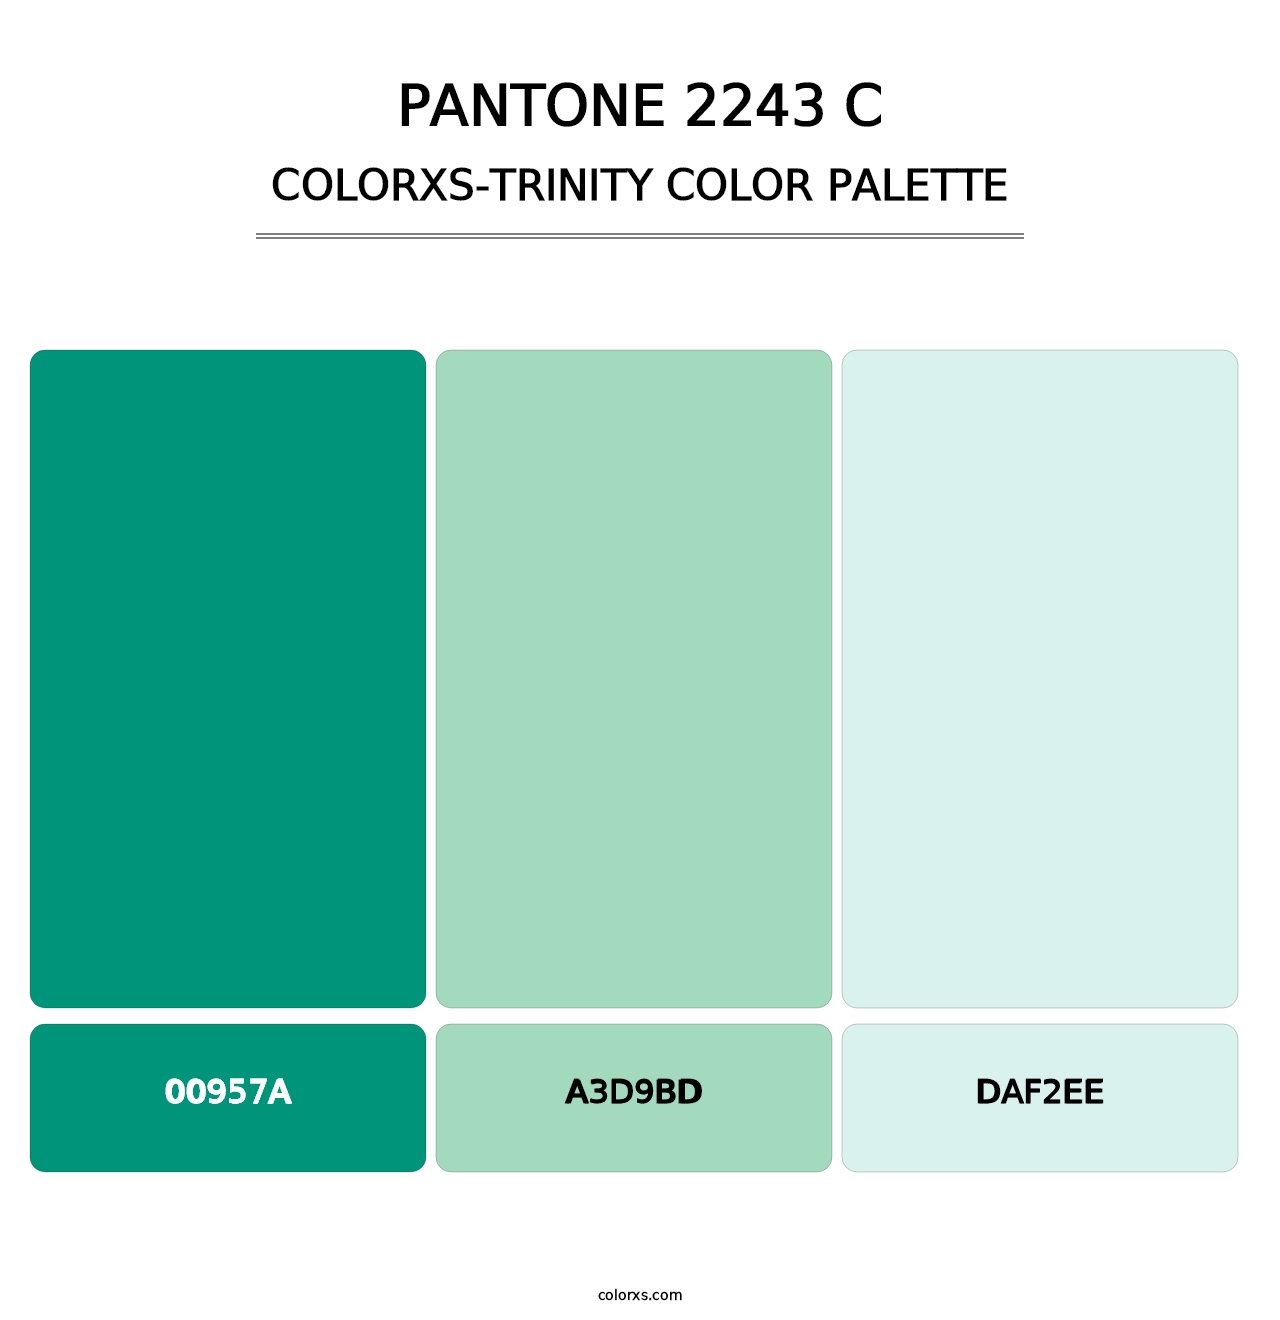 PANTONE 2243 C - Colorxs Trinity Palette